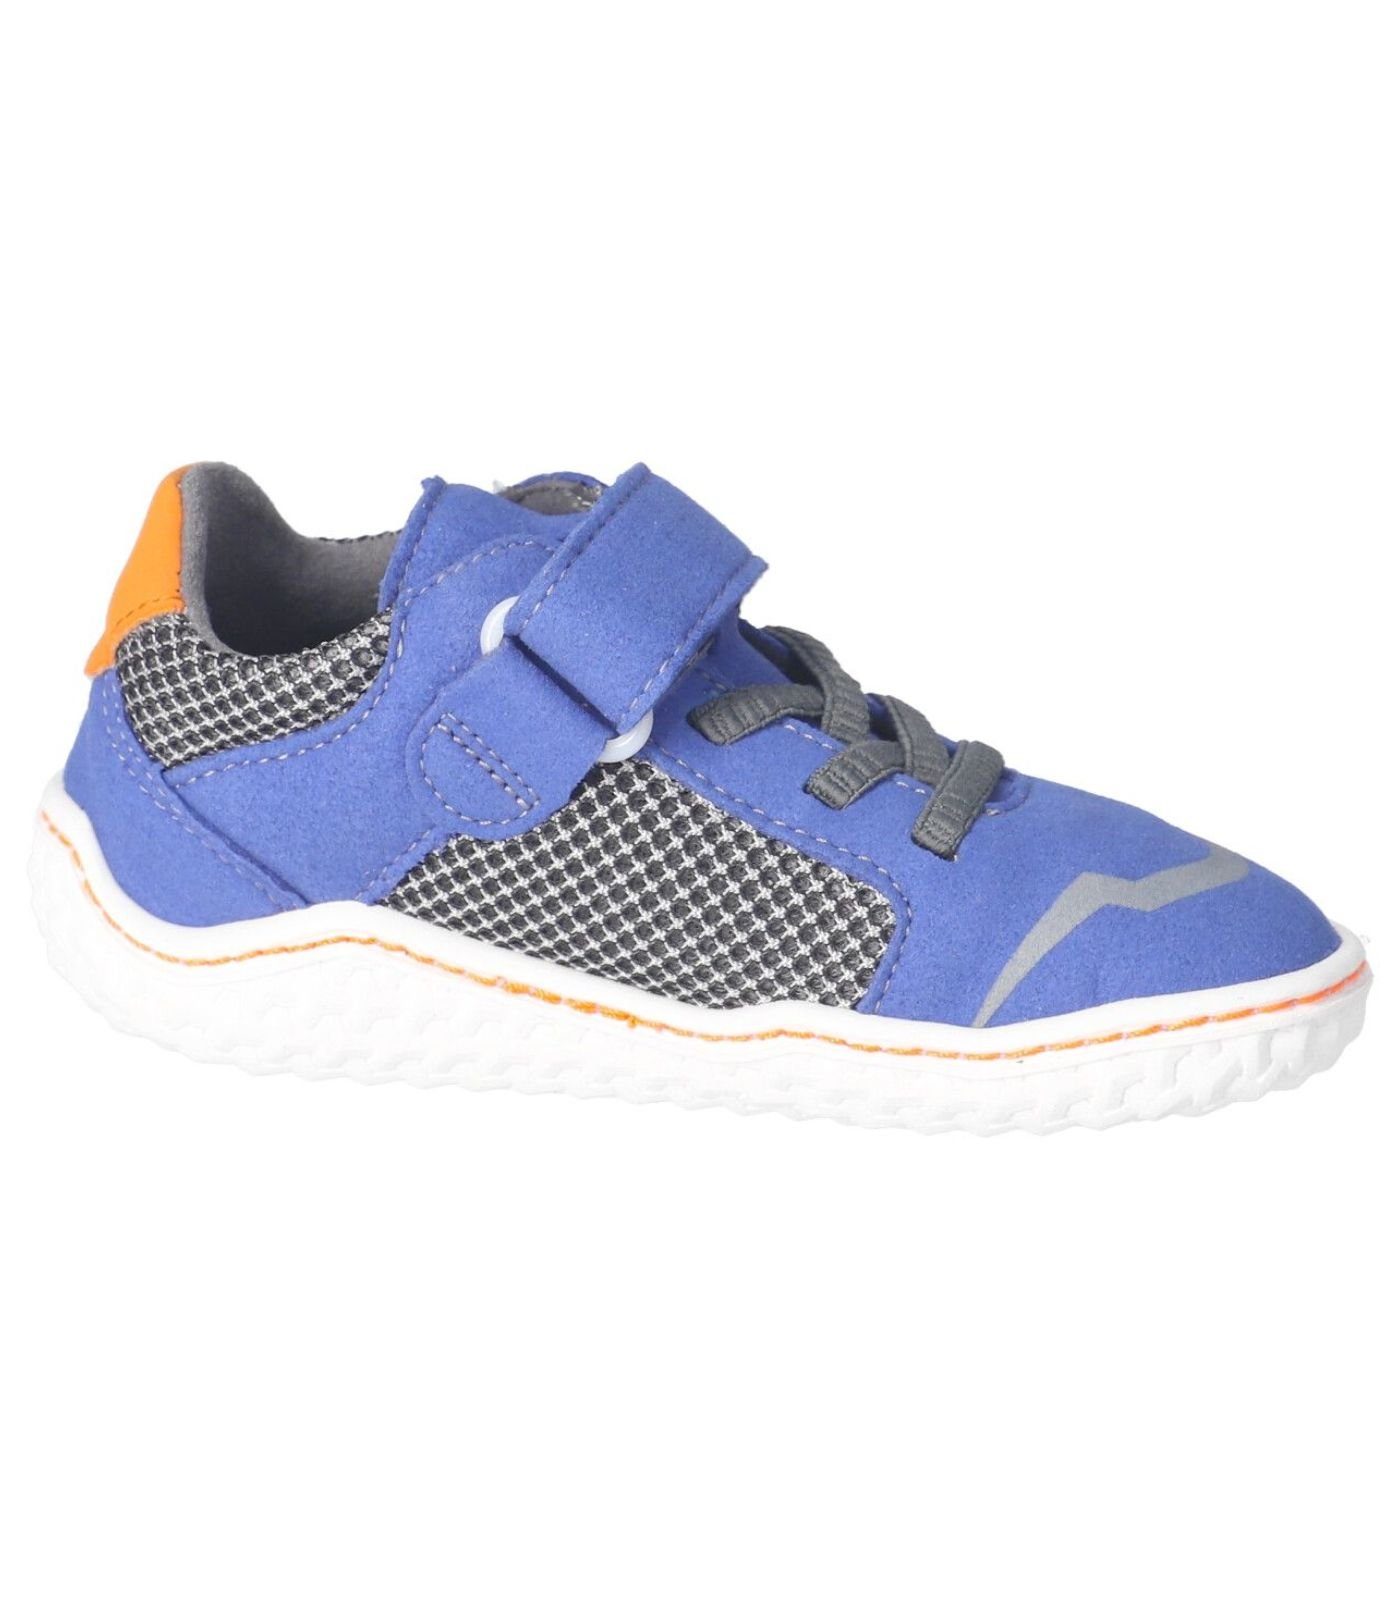 Ricosta Sneaker Lederimitat/Textil Sneaker Blau Grau